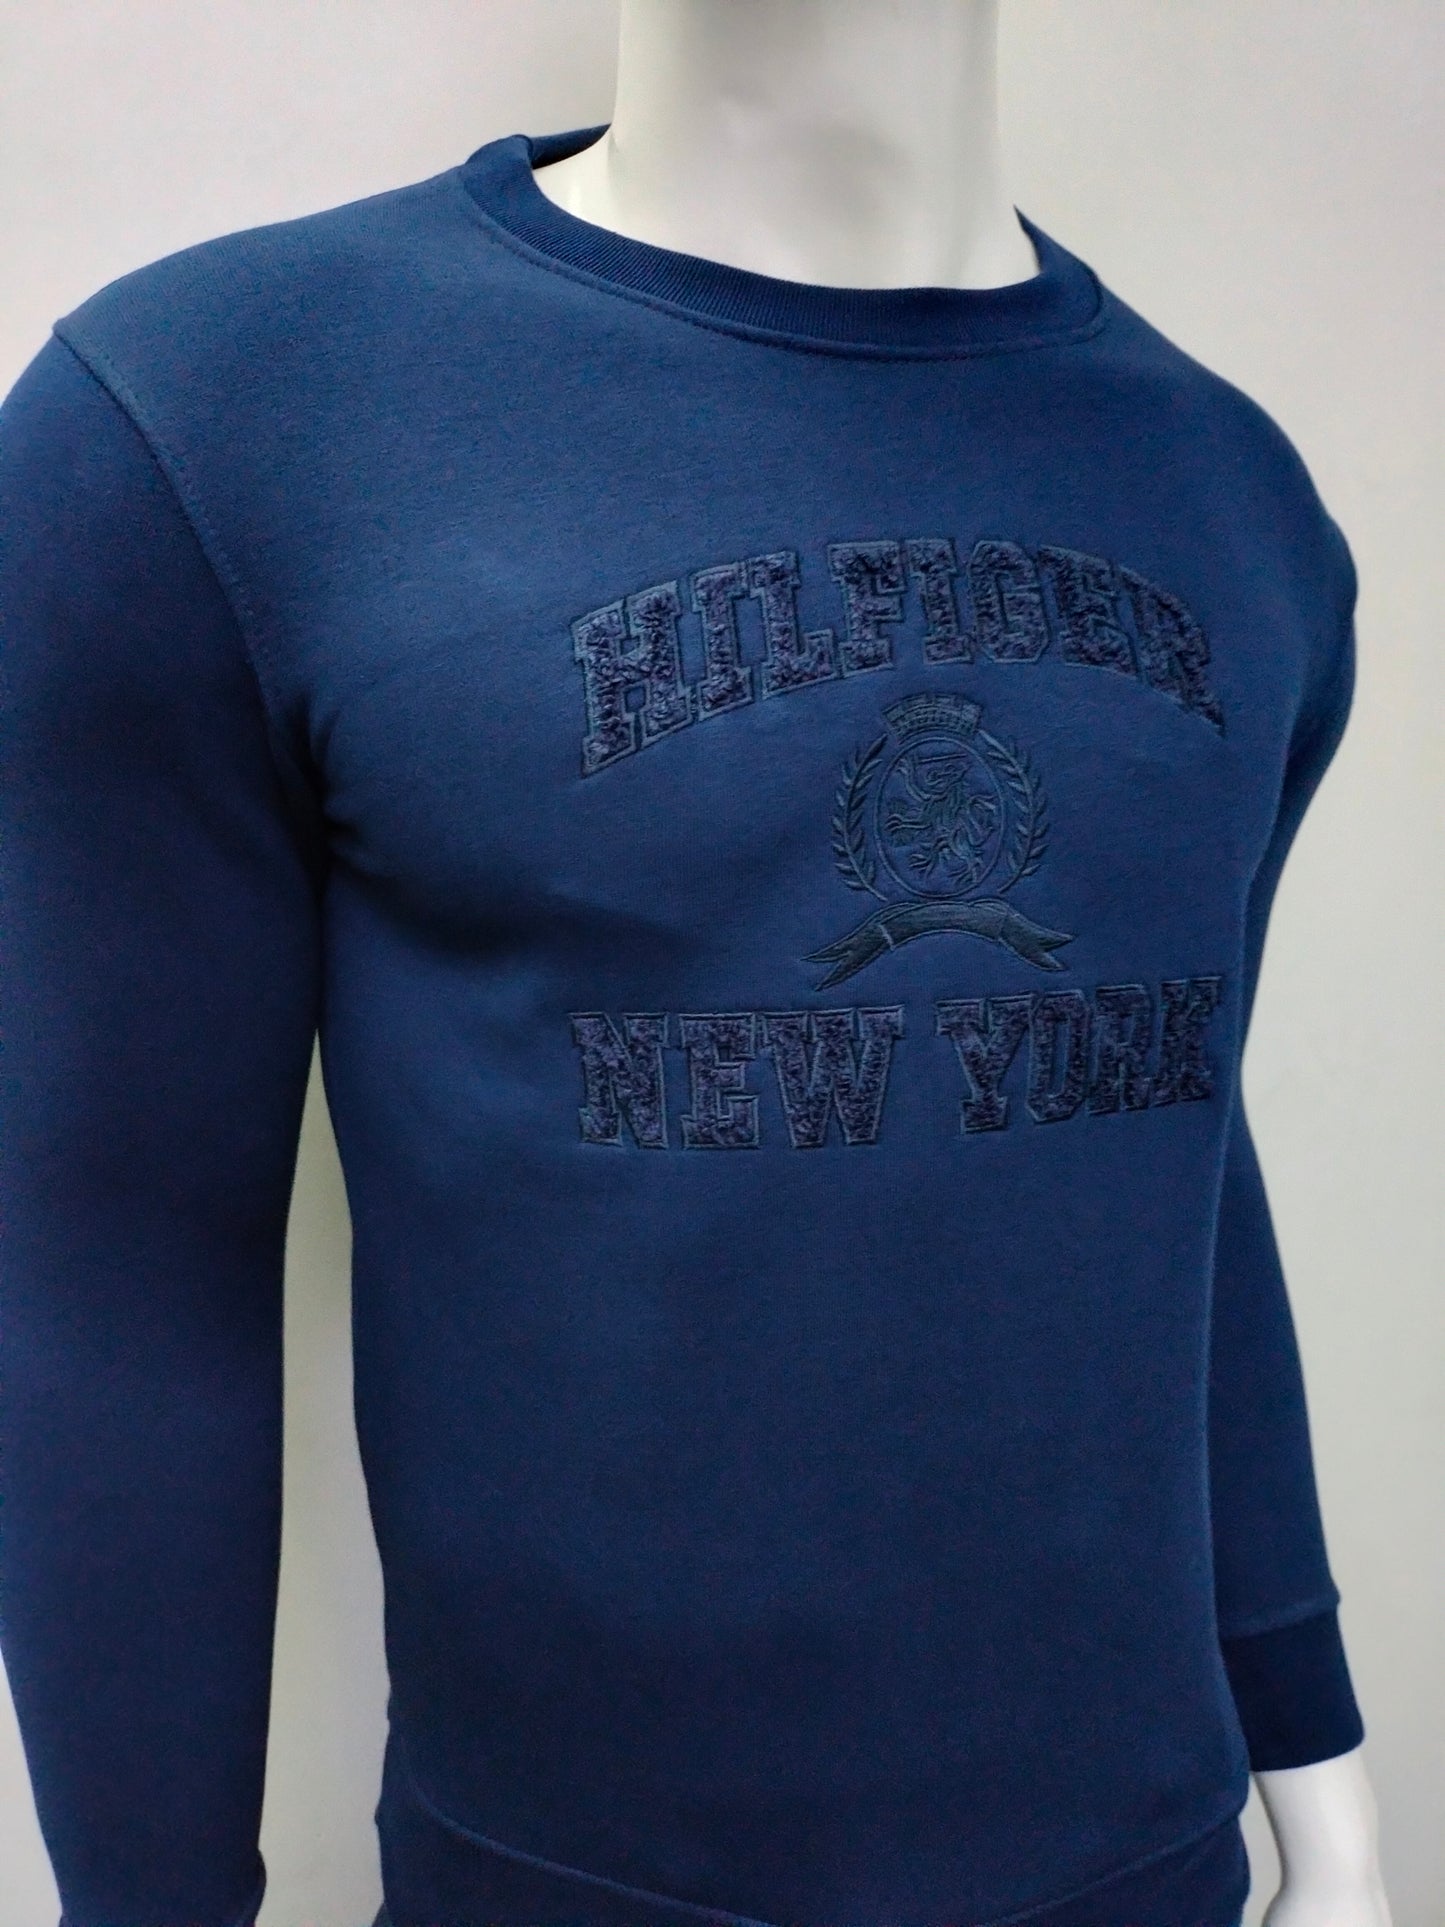 Tommy Hilfiger New York sweatshirt